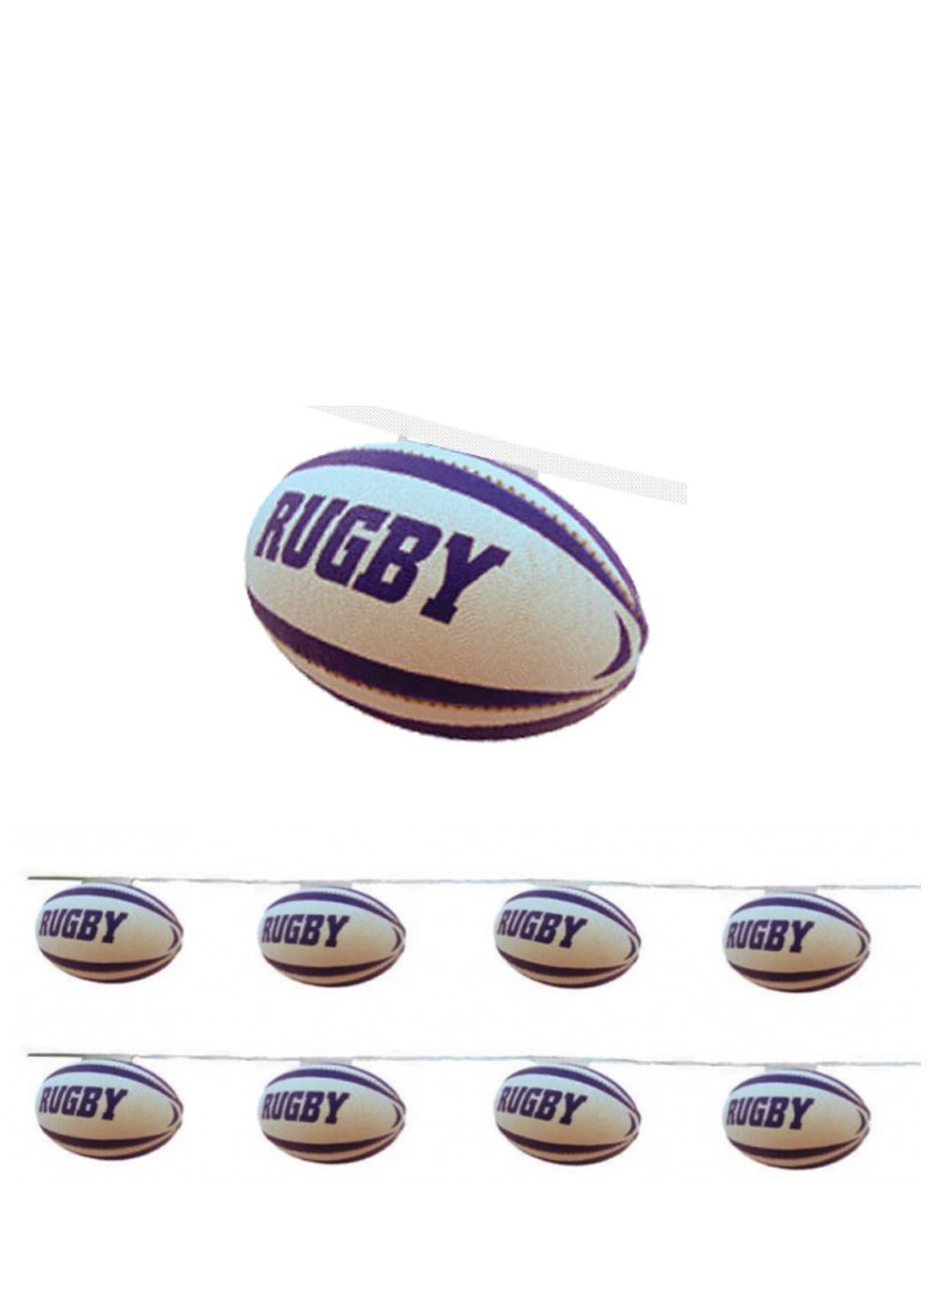 Assiette jetable personnalisable - Pack de 5 france Rugby